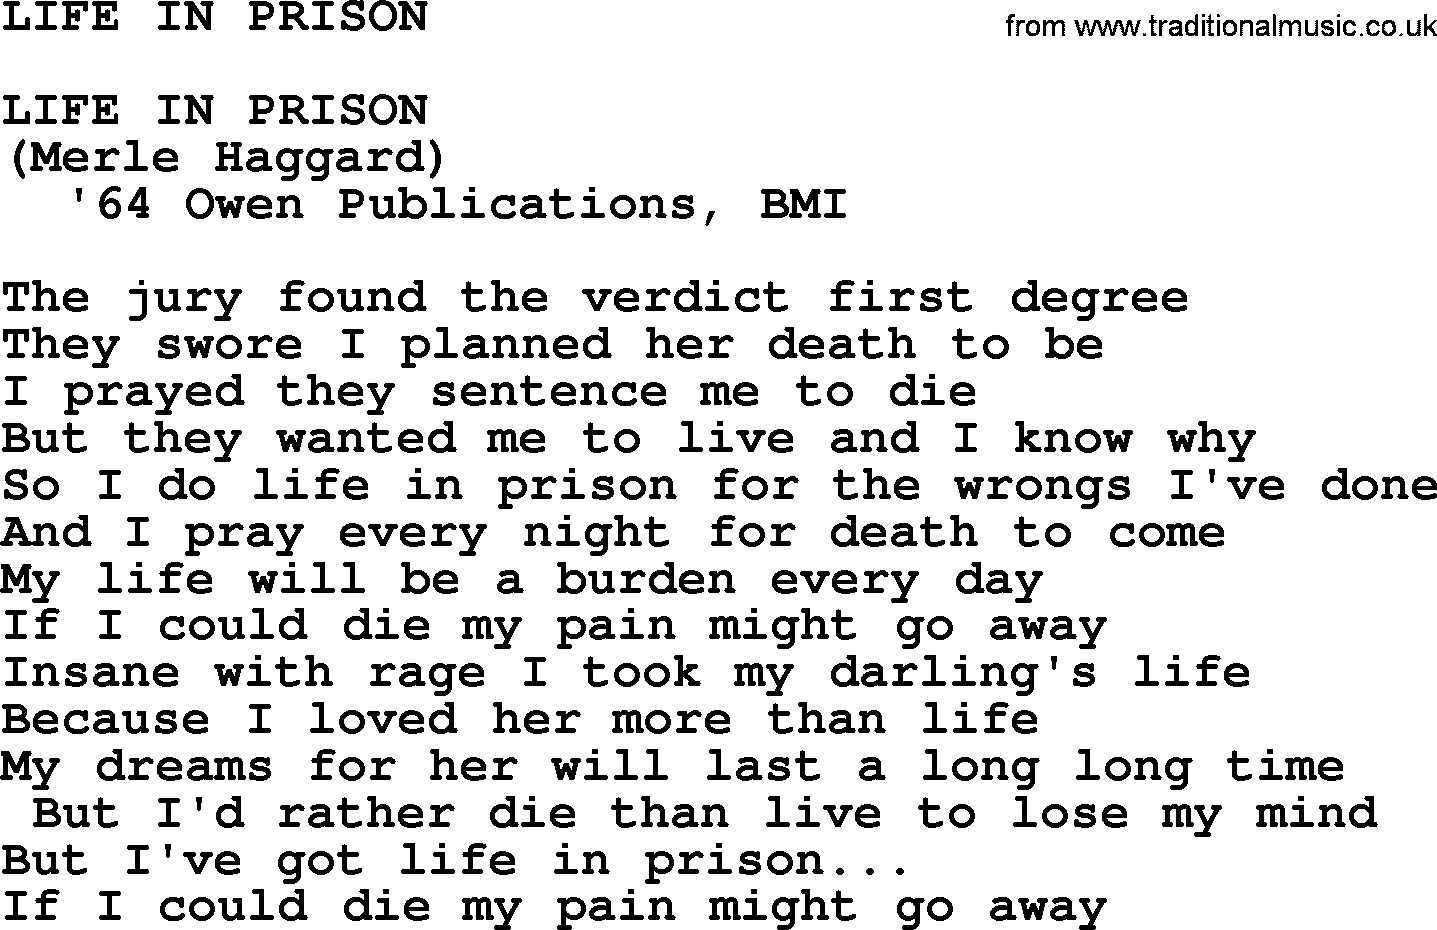 Merle Haggard song: Life In Prison, lyrics.